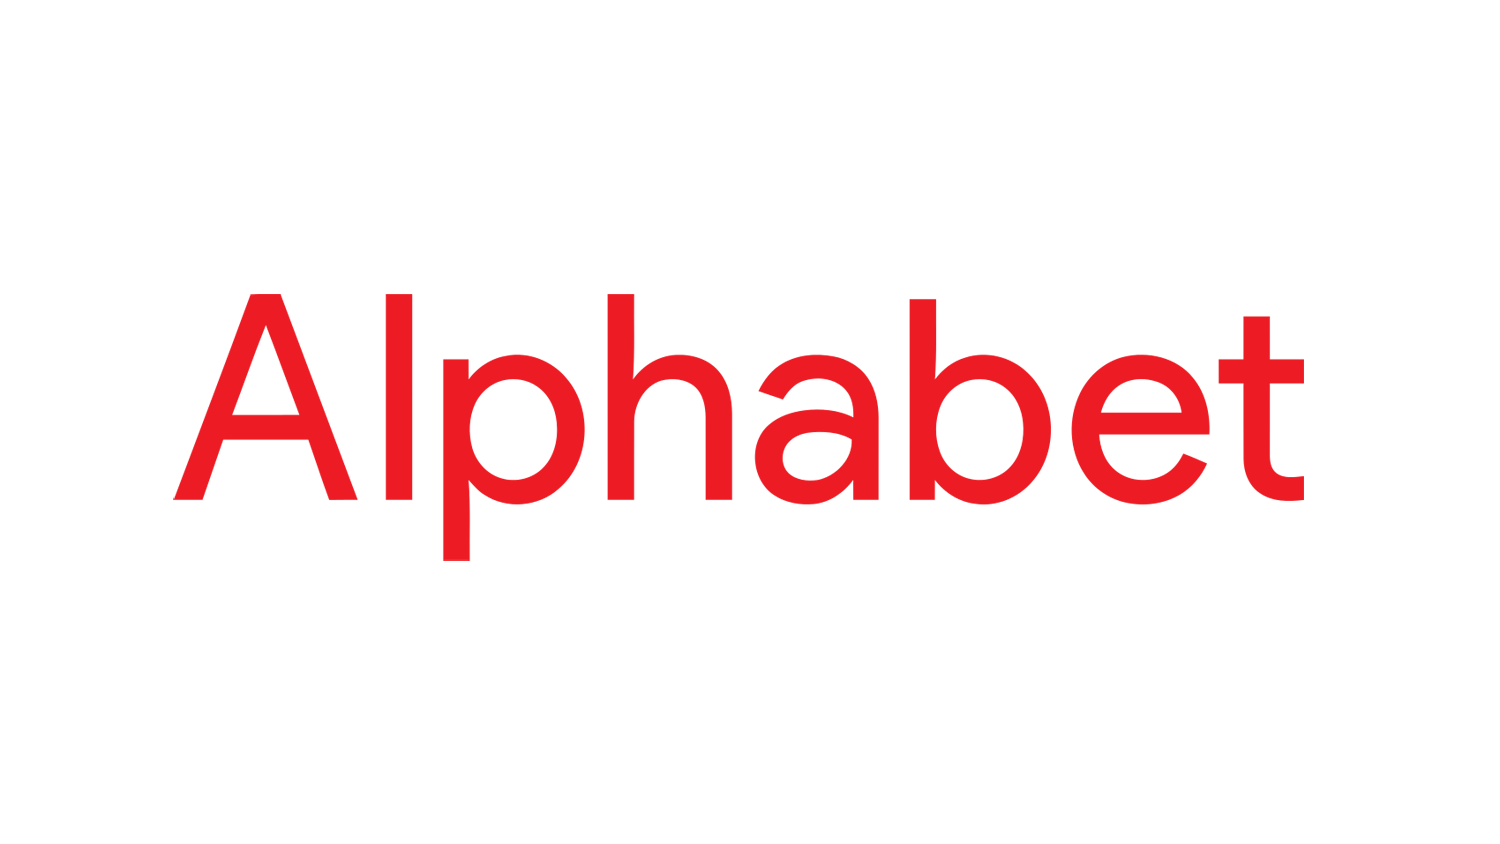 Alphabet Google